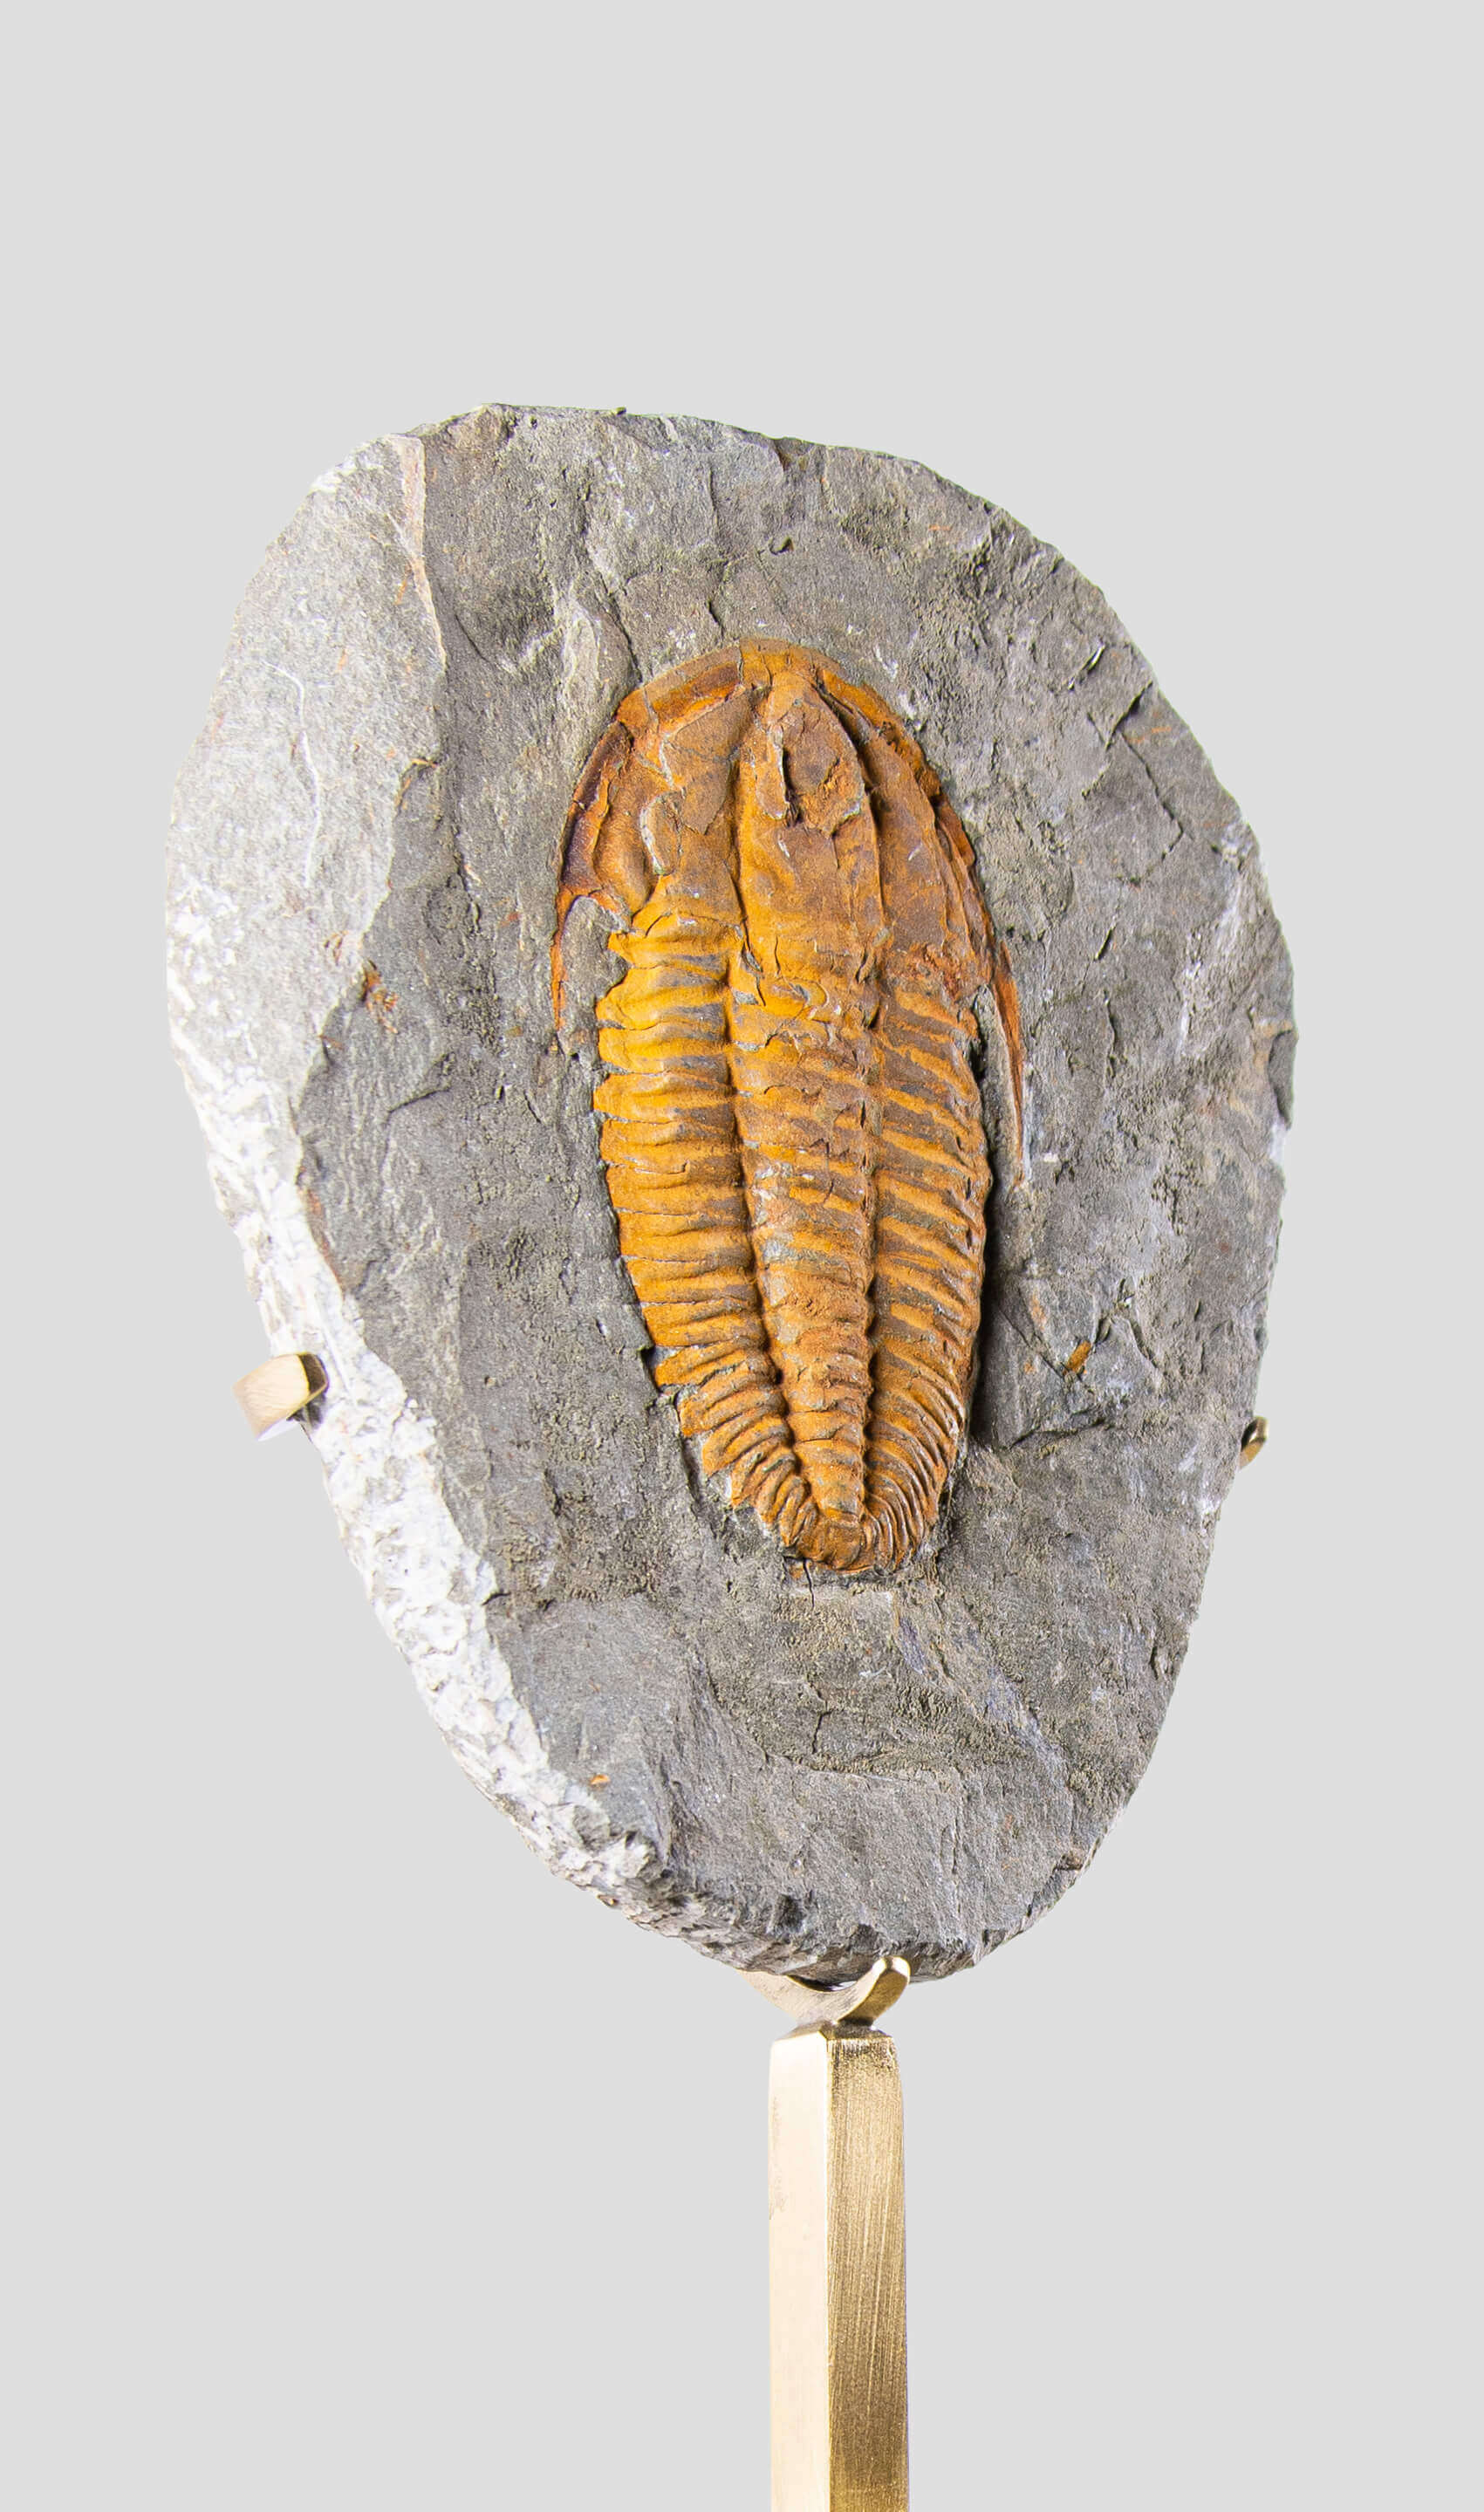 Rare fossil saukianda andalusiae trilobite for sale on brass stand 49